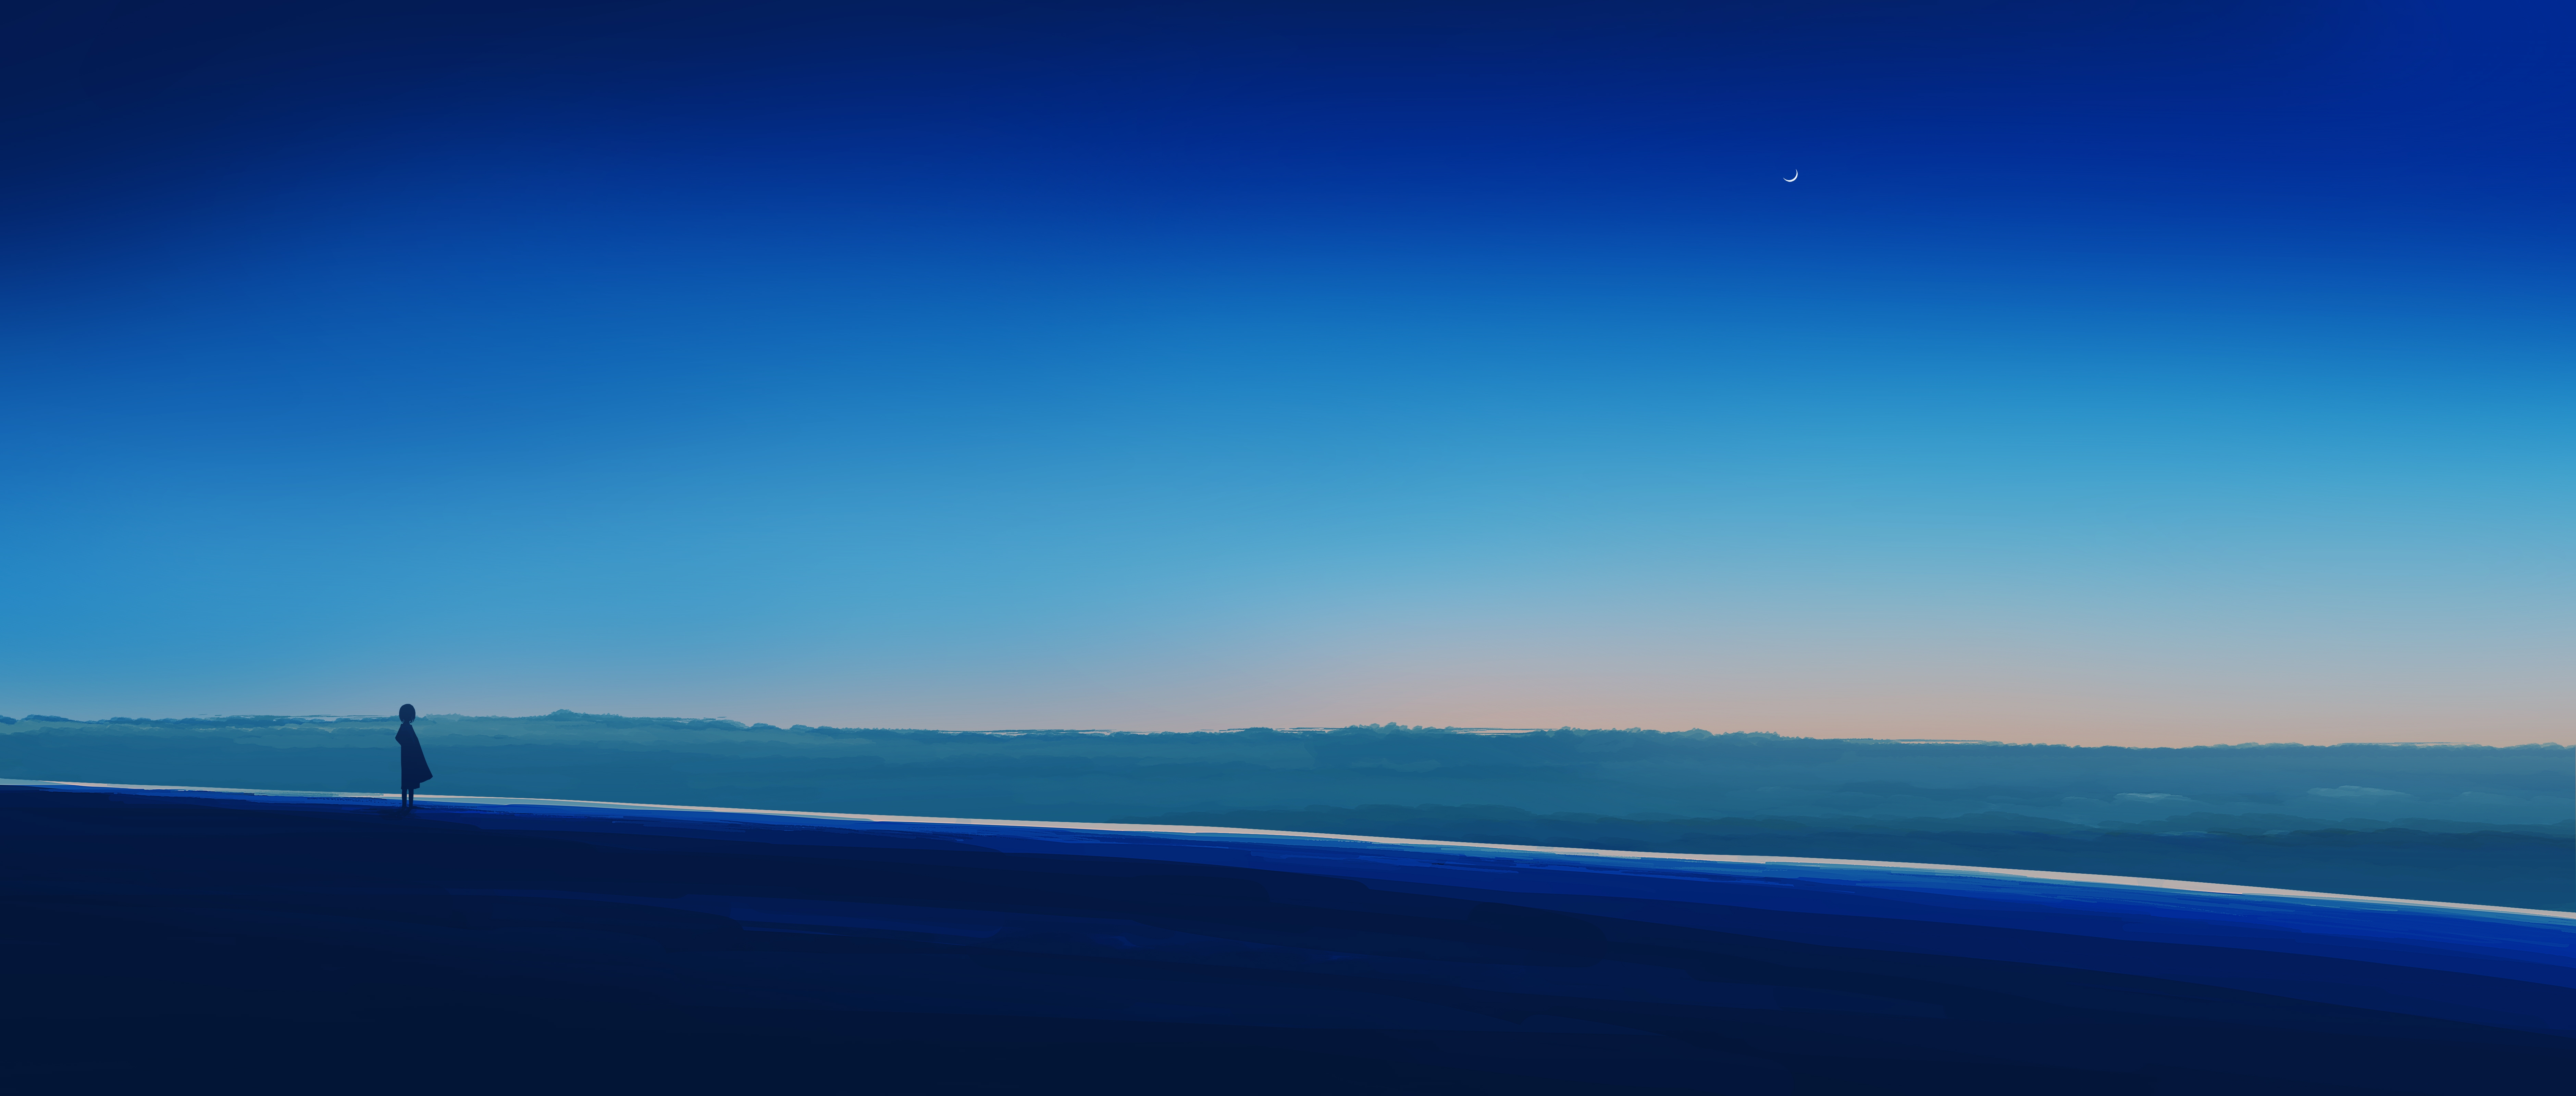 HD wallpaper, Horizon, Lonely, Mood, Alone, Crescent Moon, 5K, Panoramic, Blue Sky